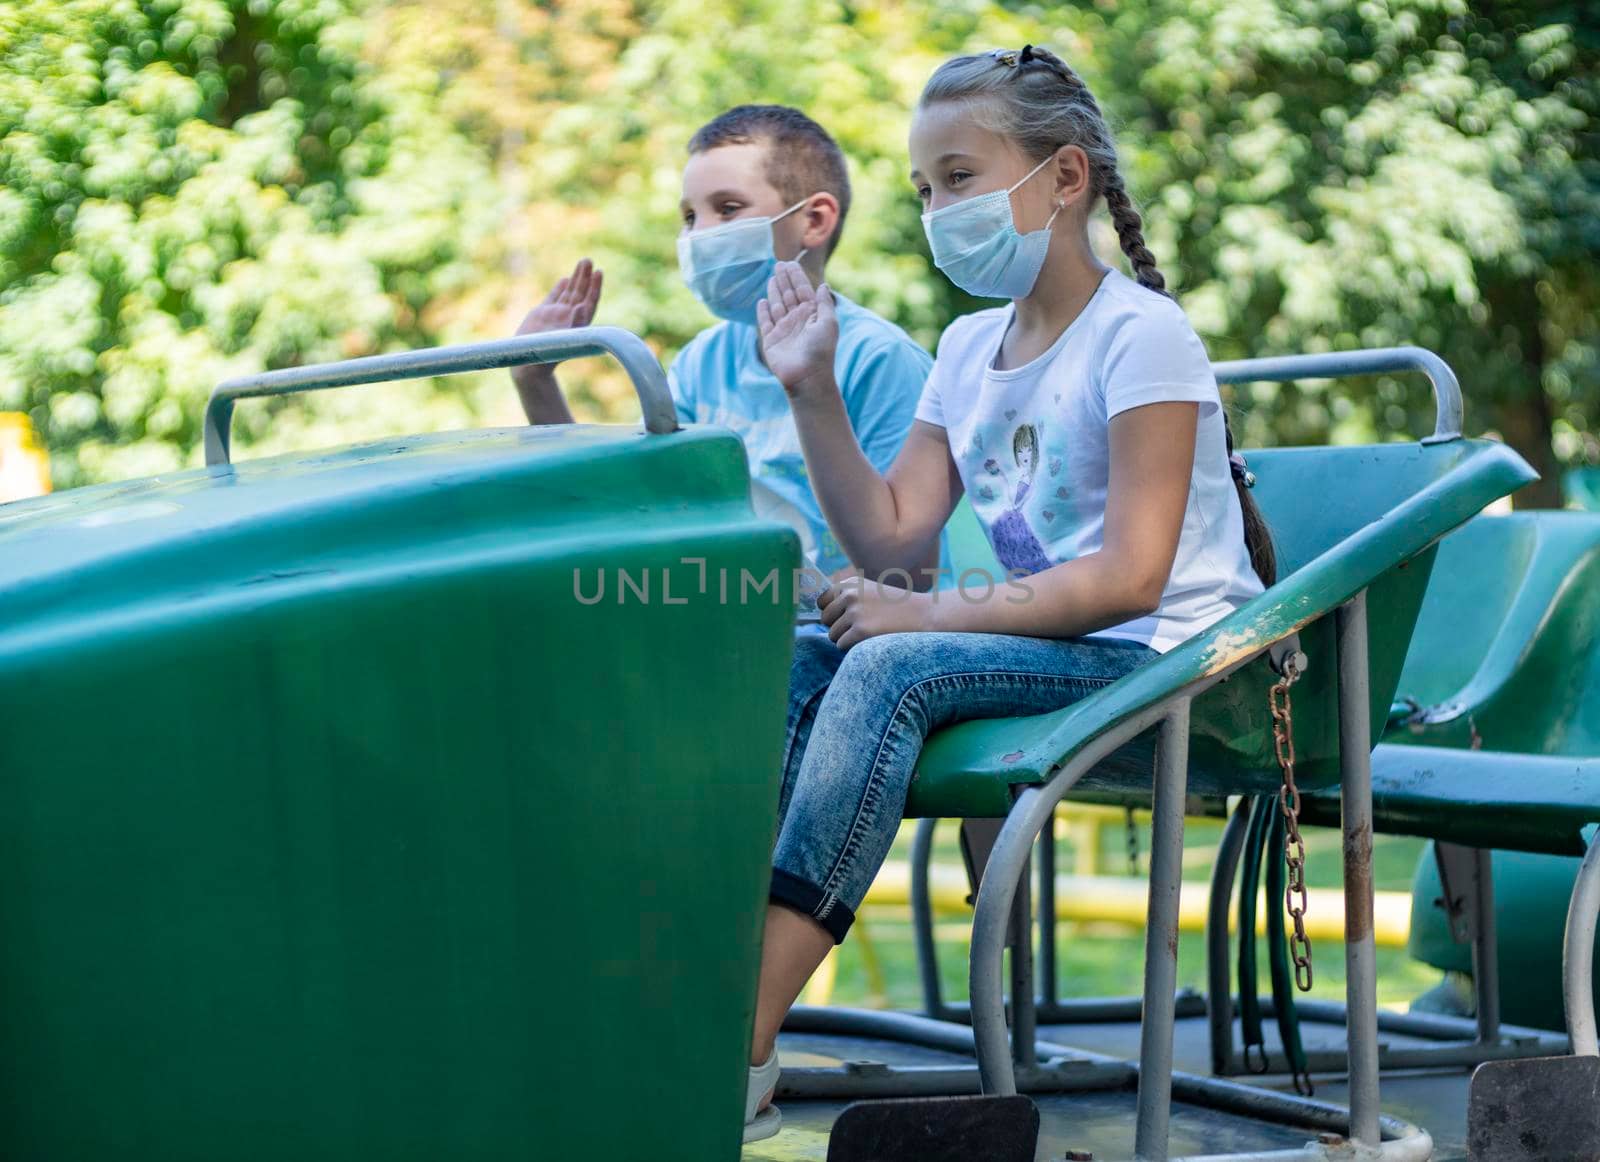 children in medical masks ride an attraction train